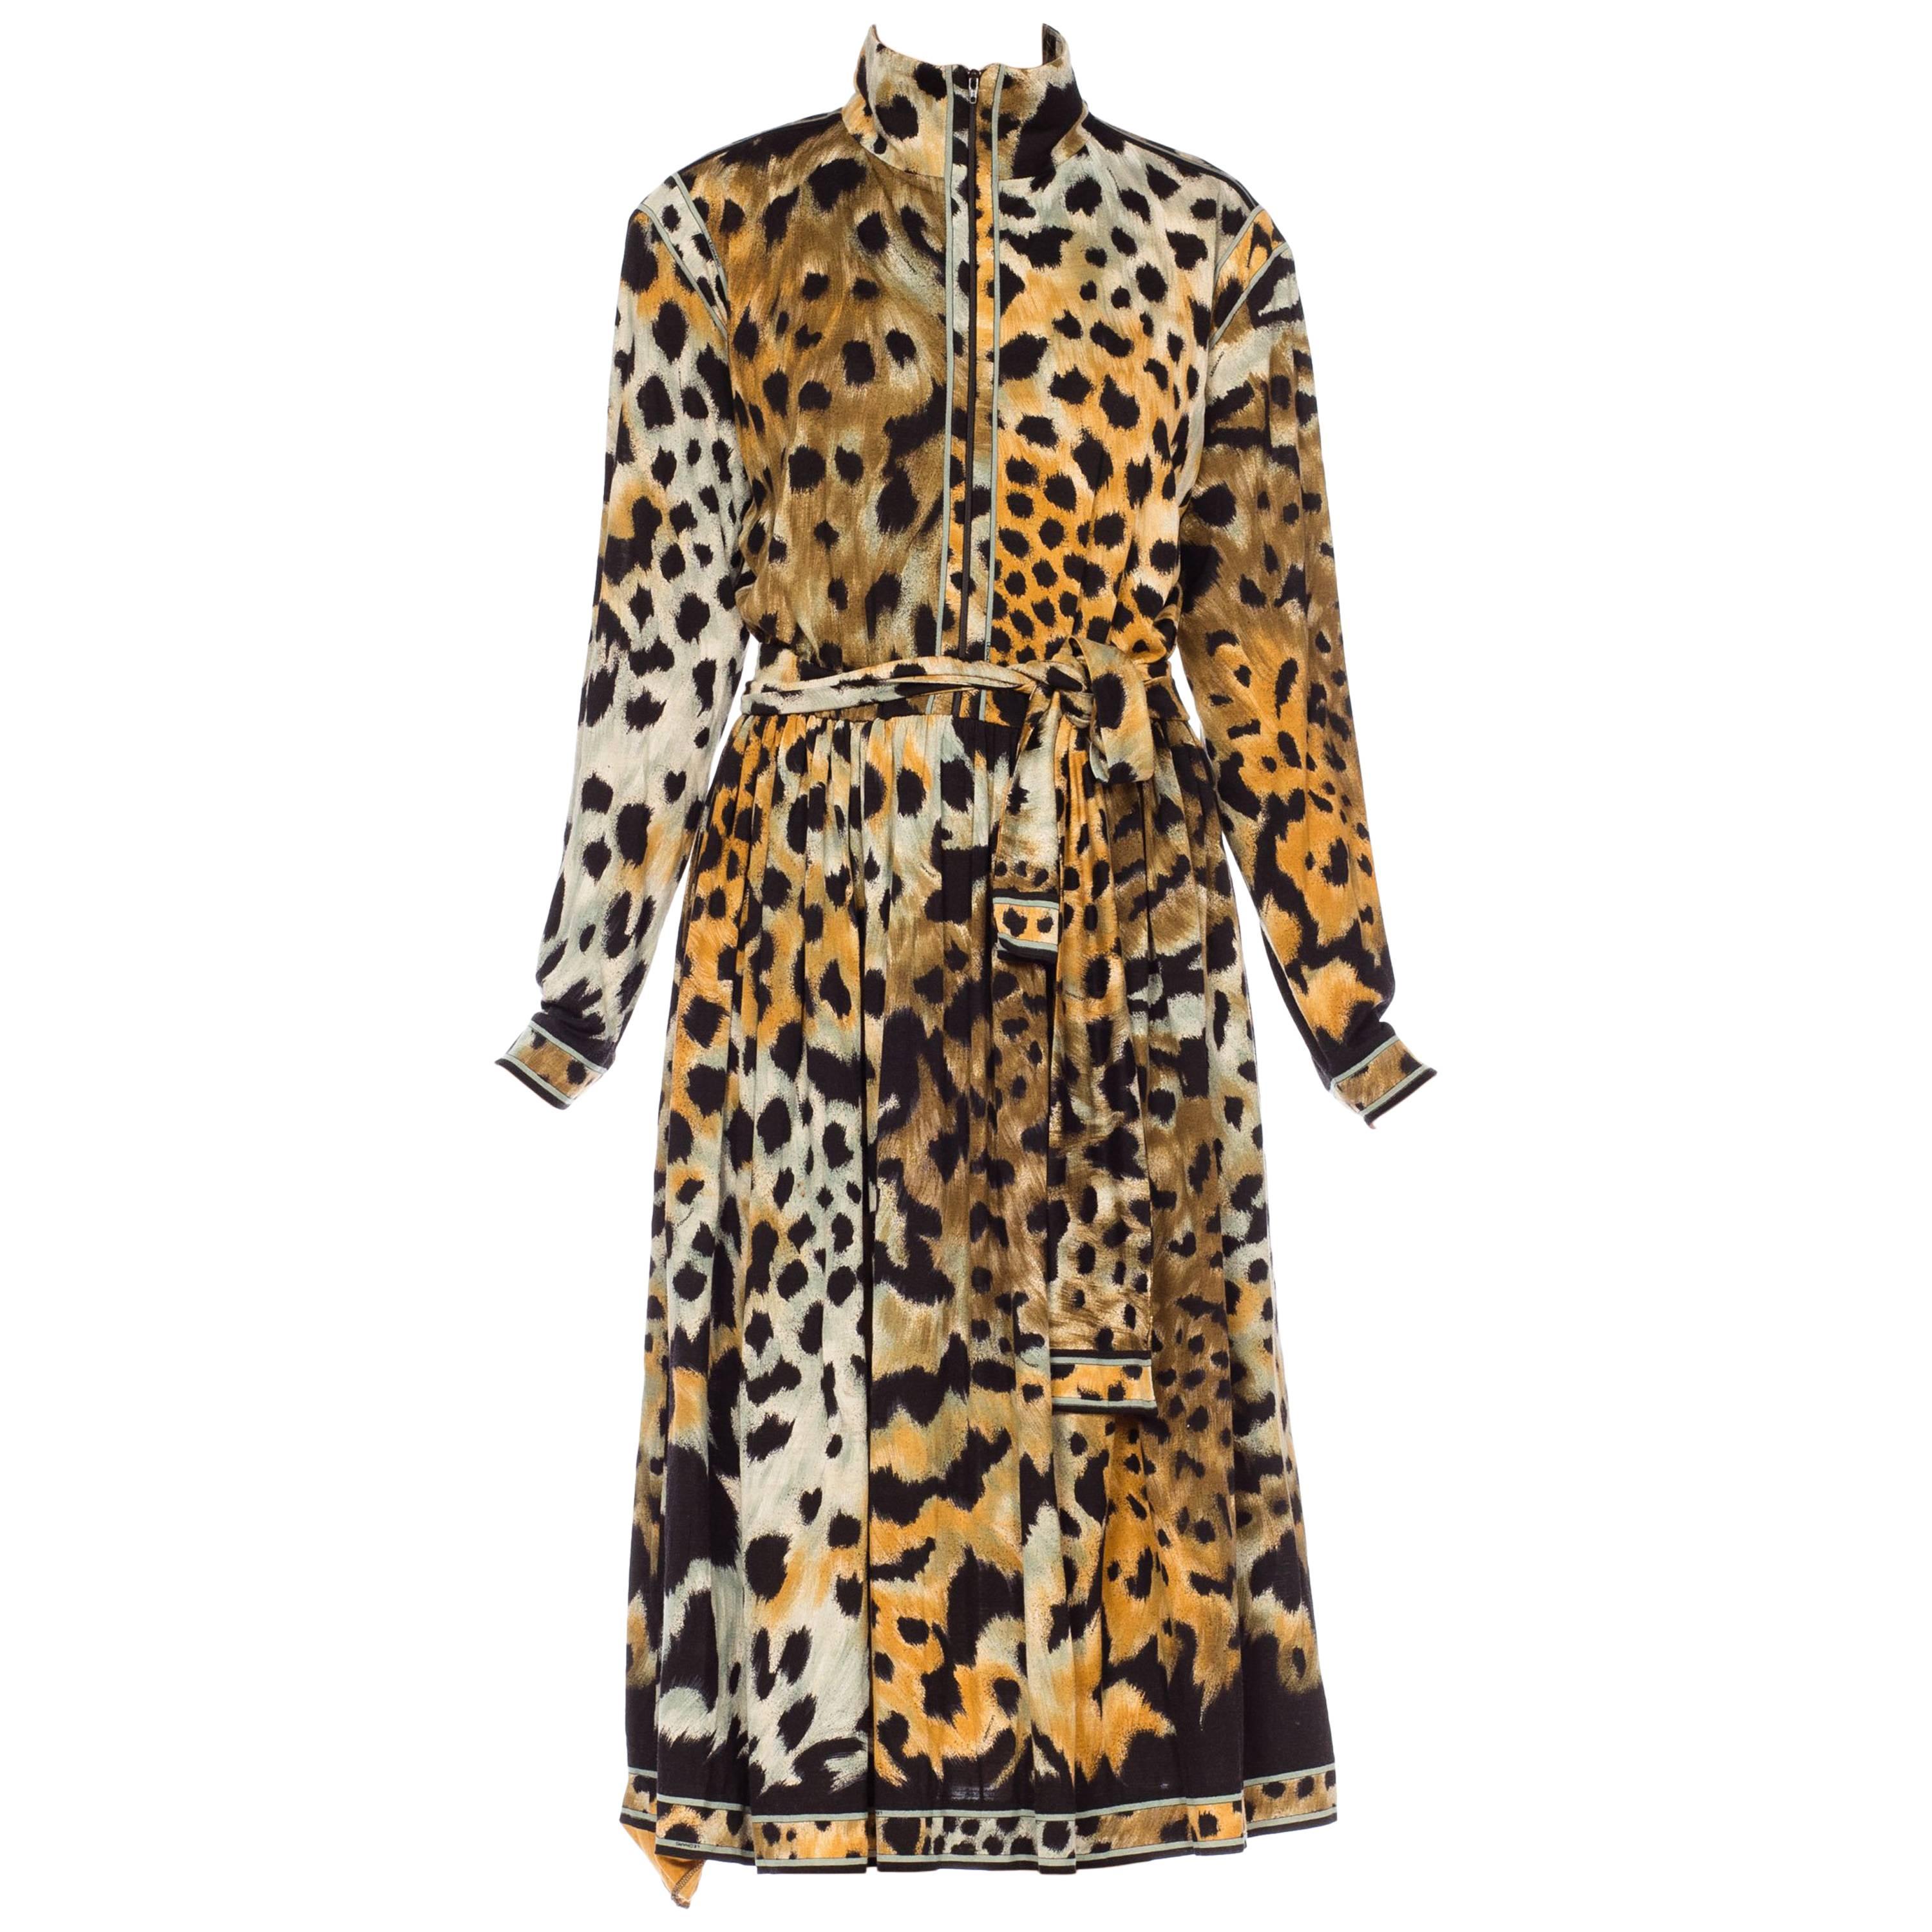 Leopard Print Leonard French Jersey Dress